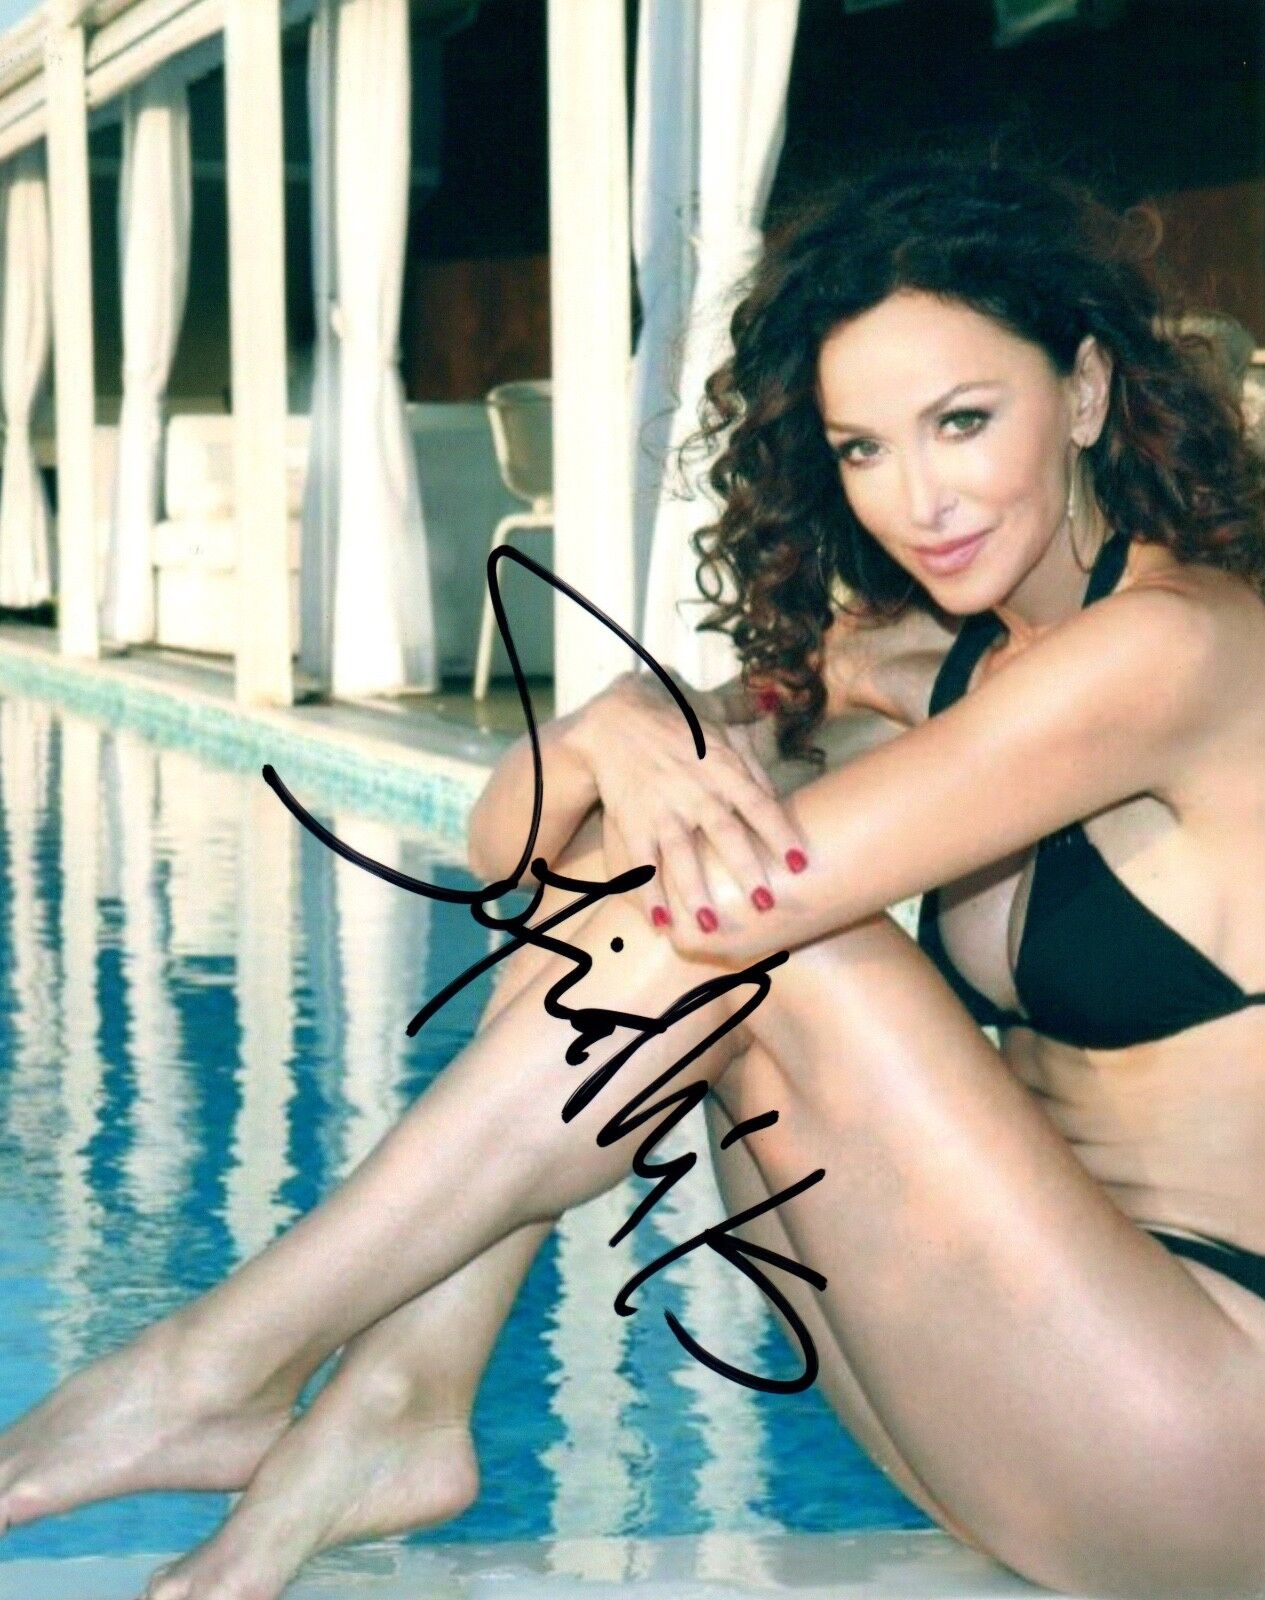 Sofia Milos Signed Autograph 8x10 Photo Poster painting Sexy CSI MIAMI Actress Bikini Pose COA